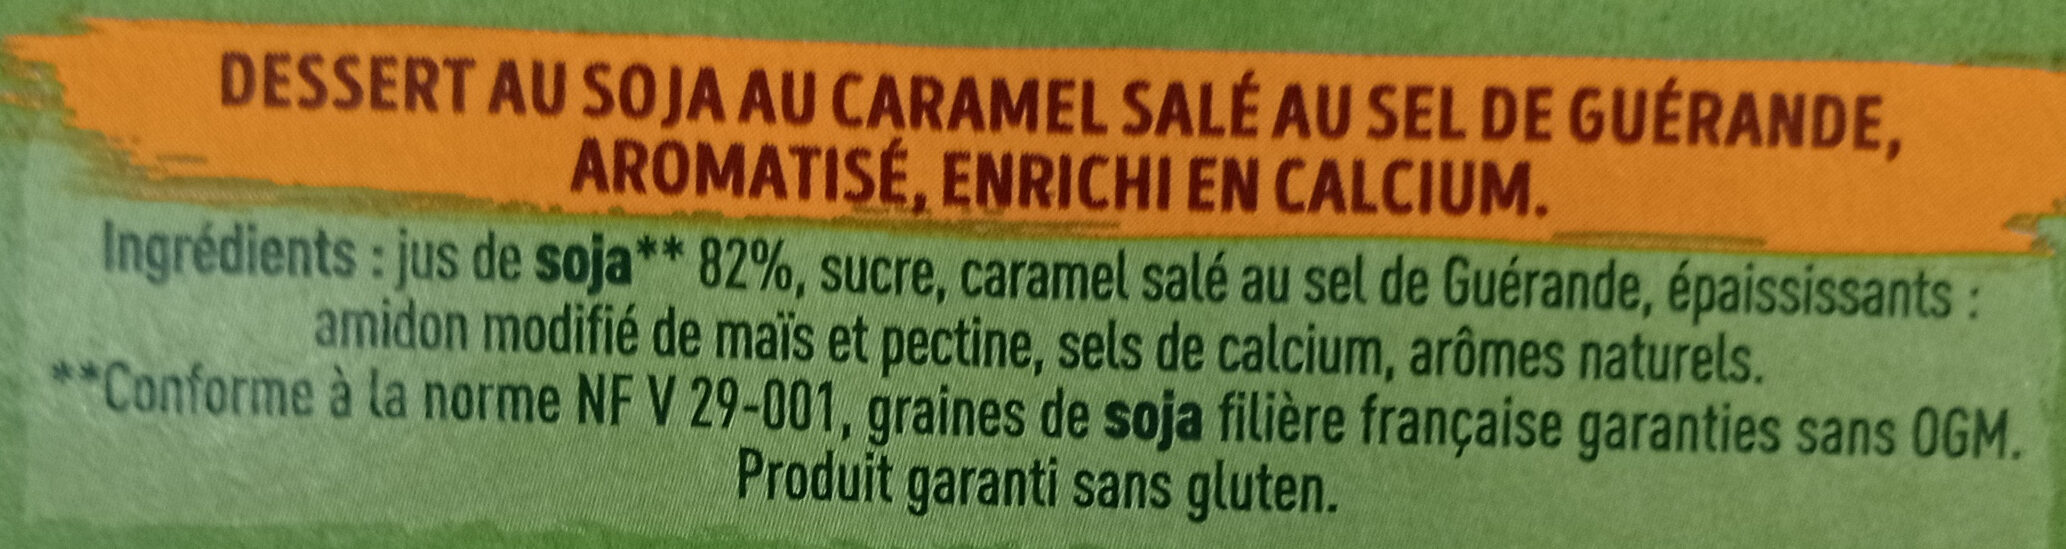 Dessert au soja caramel pointe de sel - Ingrediënten - fr